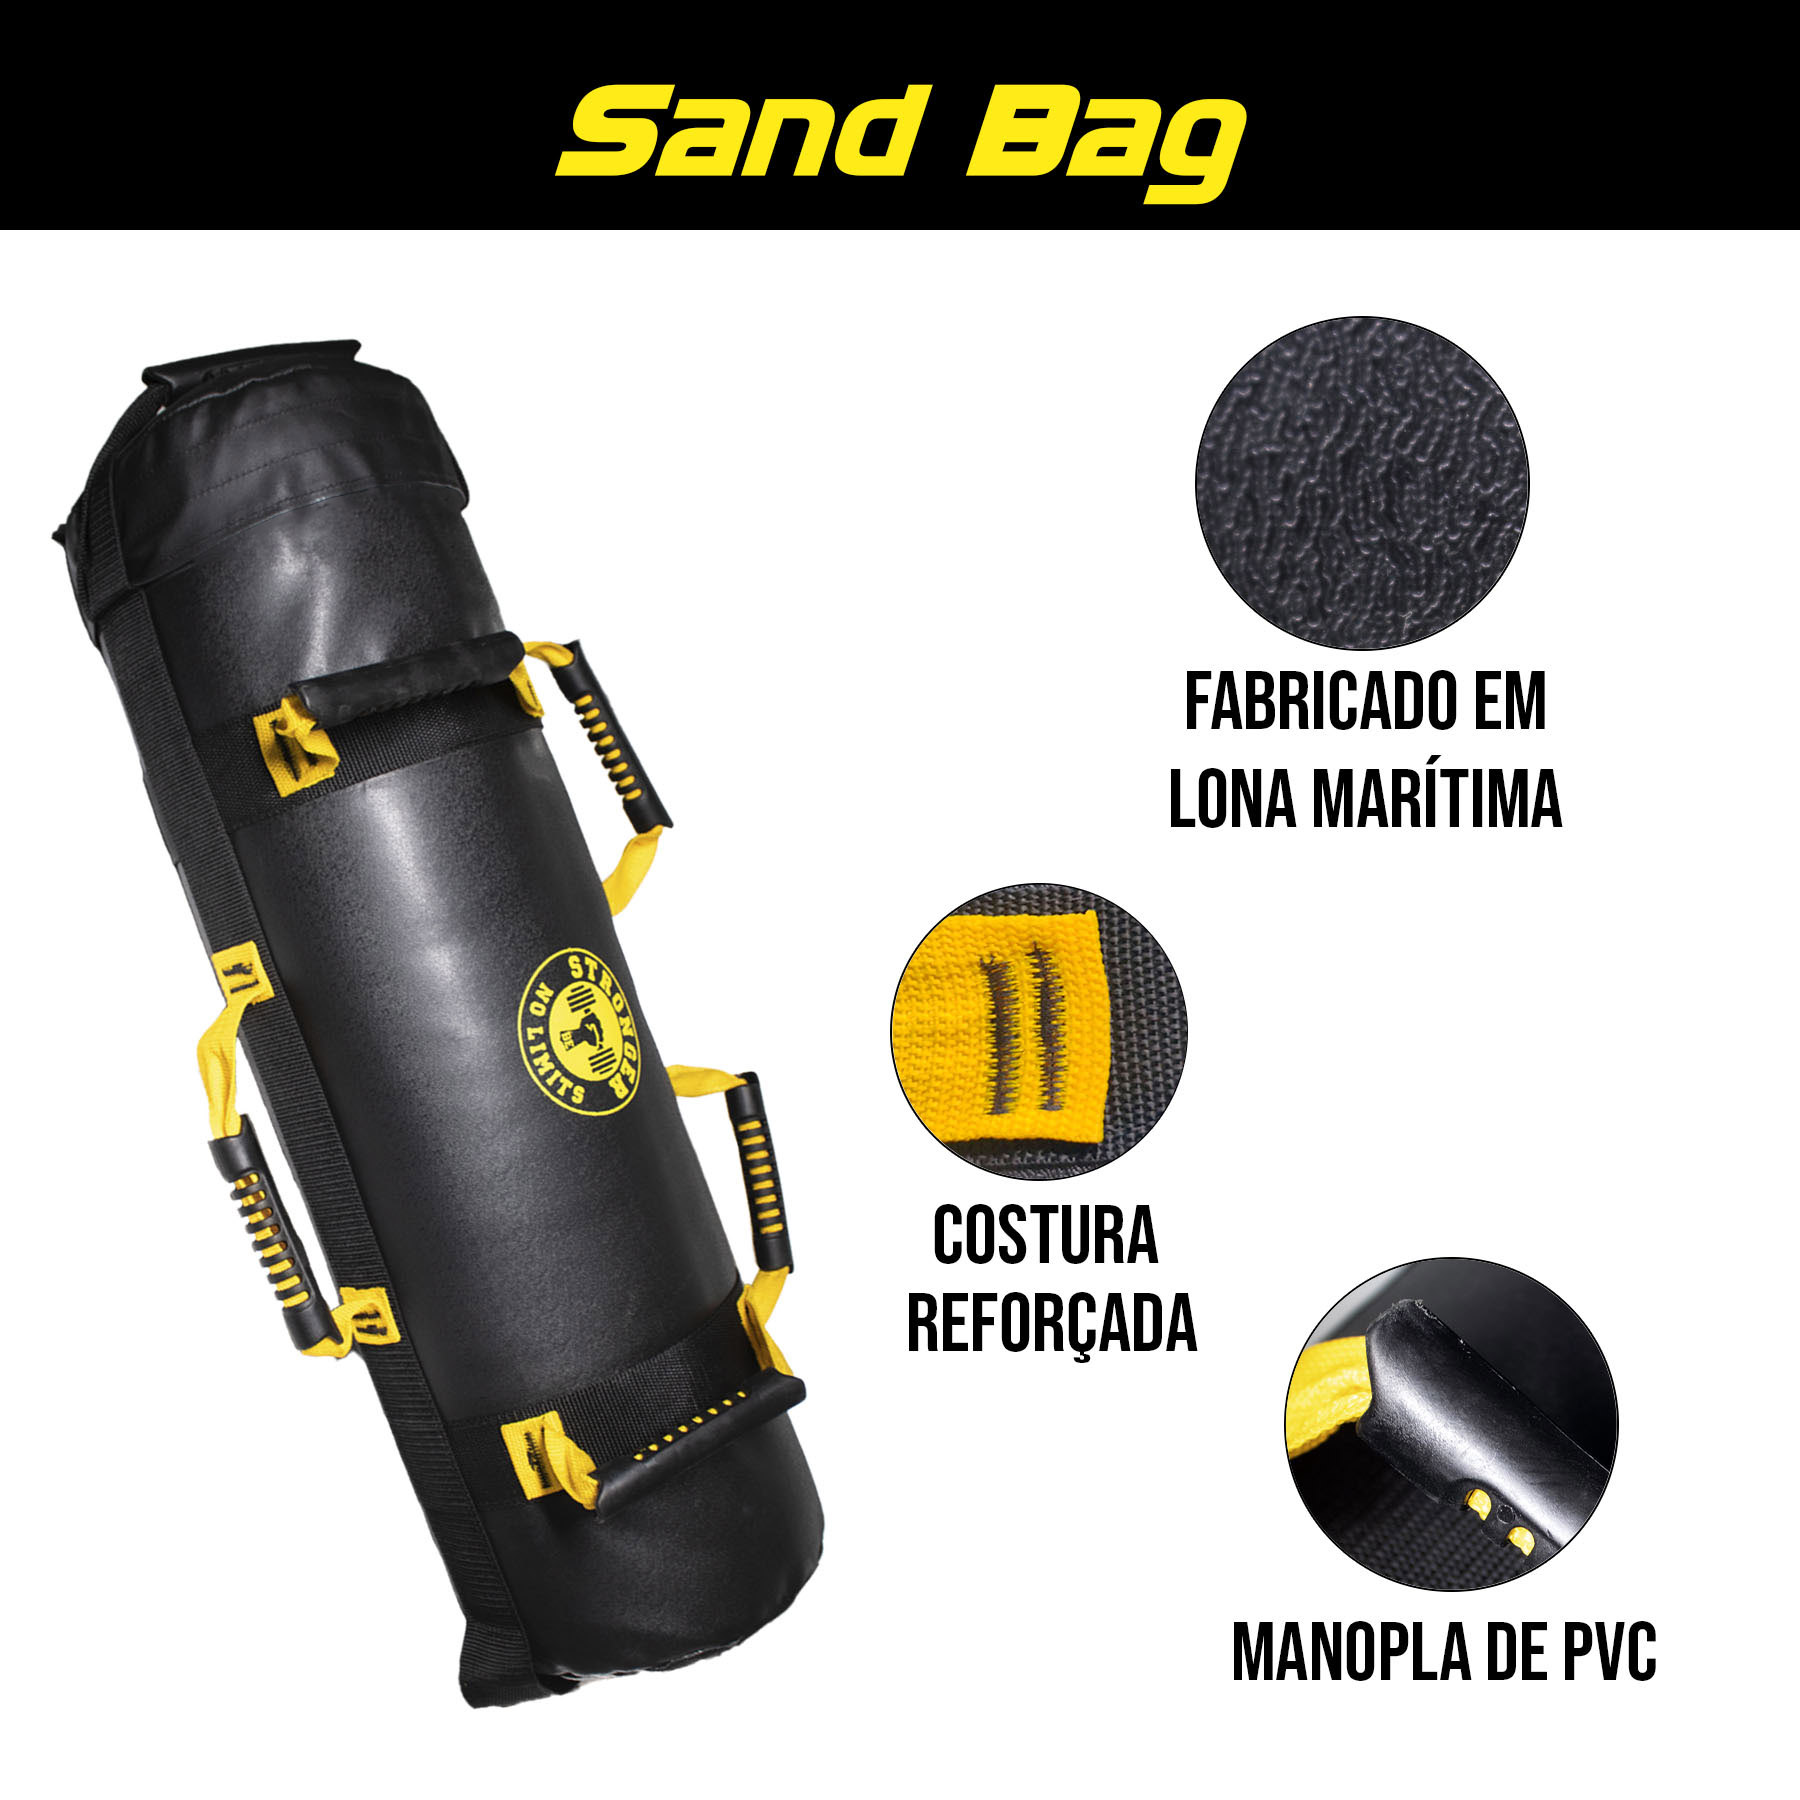 Sand Bag (Power Bag) Peso:5KG